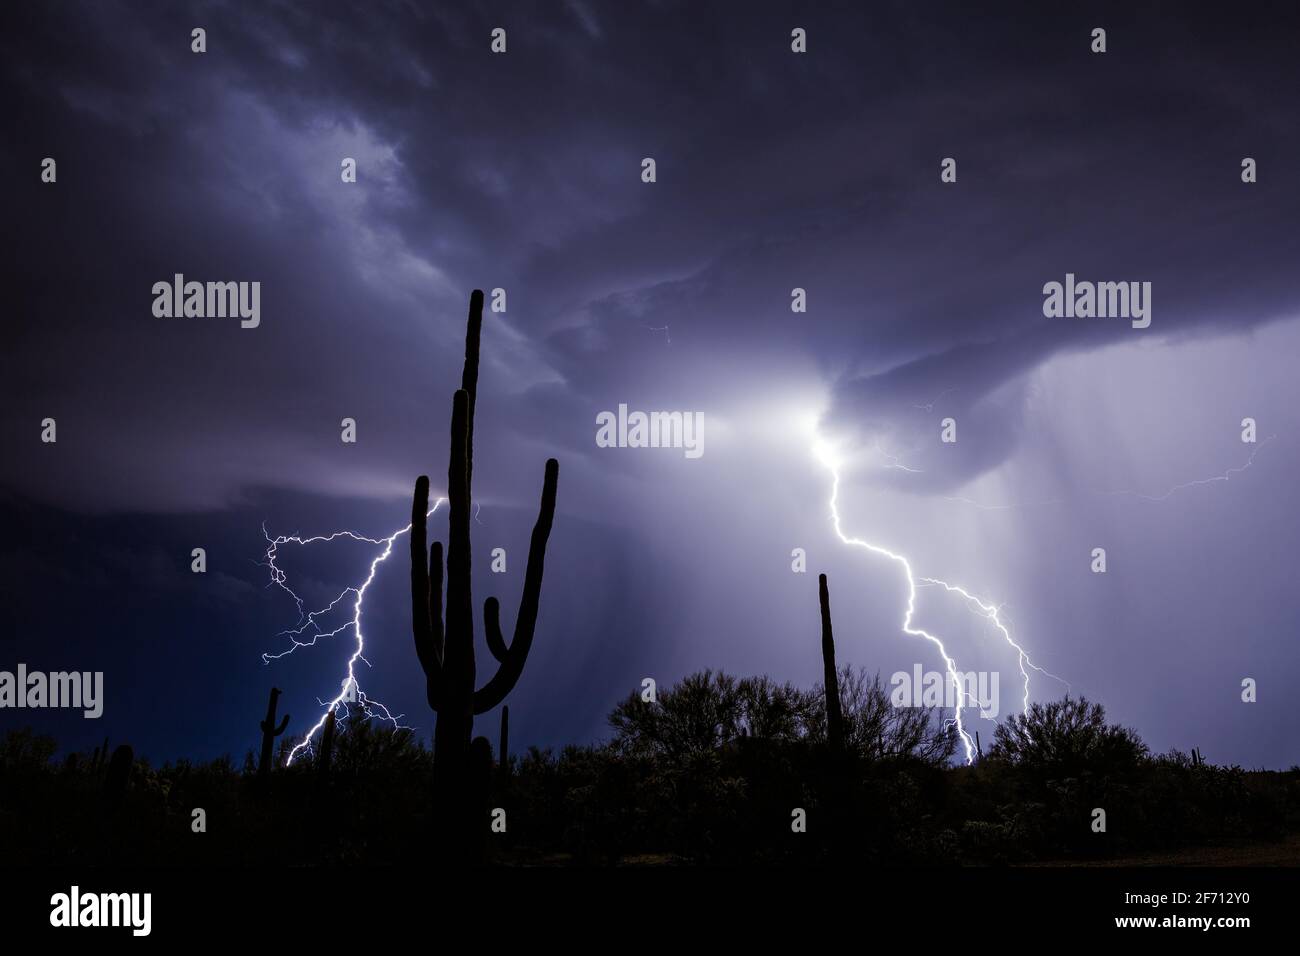 Saguaro cactus silhouettes and lightning in a monsoon thunderstorm near Tucson, Arizona Stock Photo